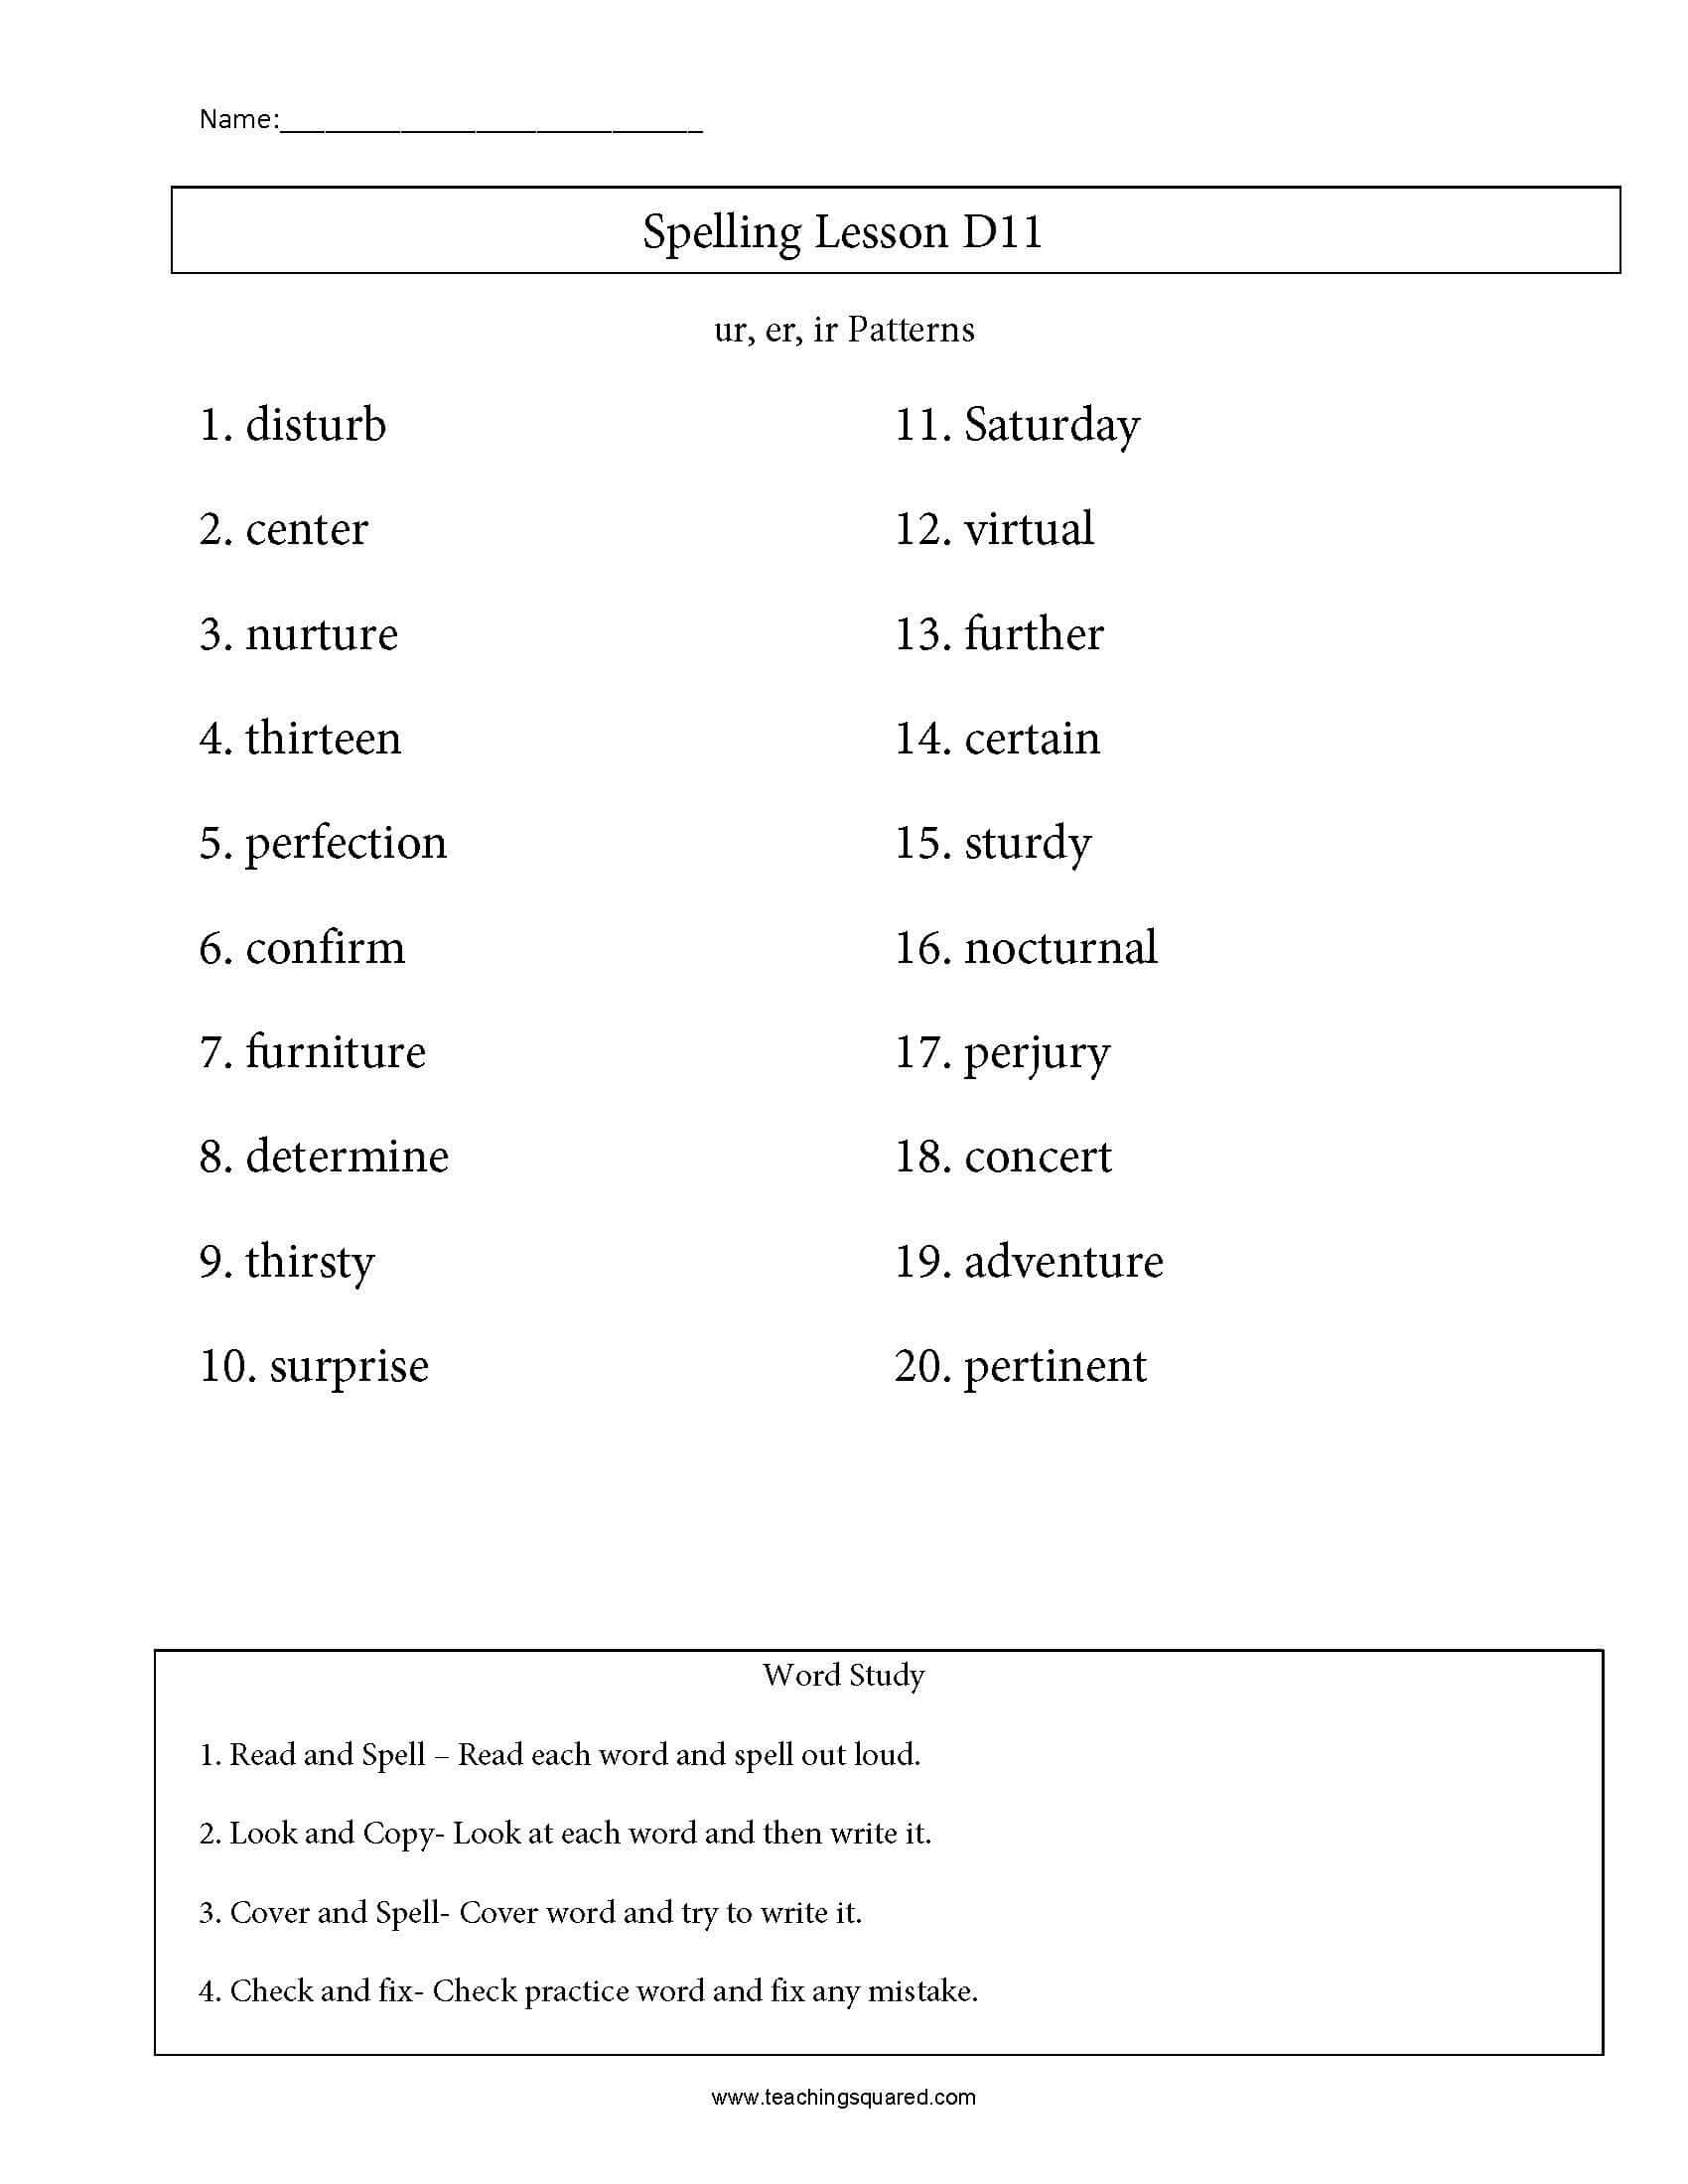 Spelling List Words D